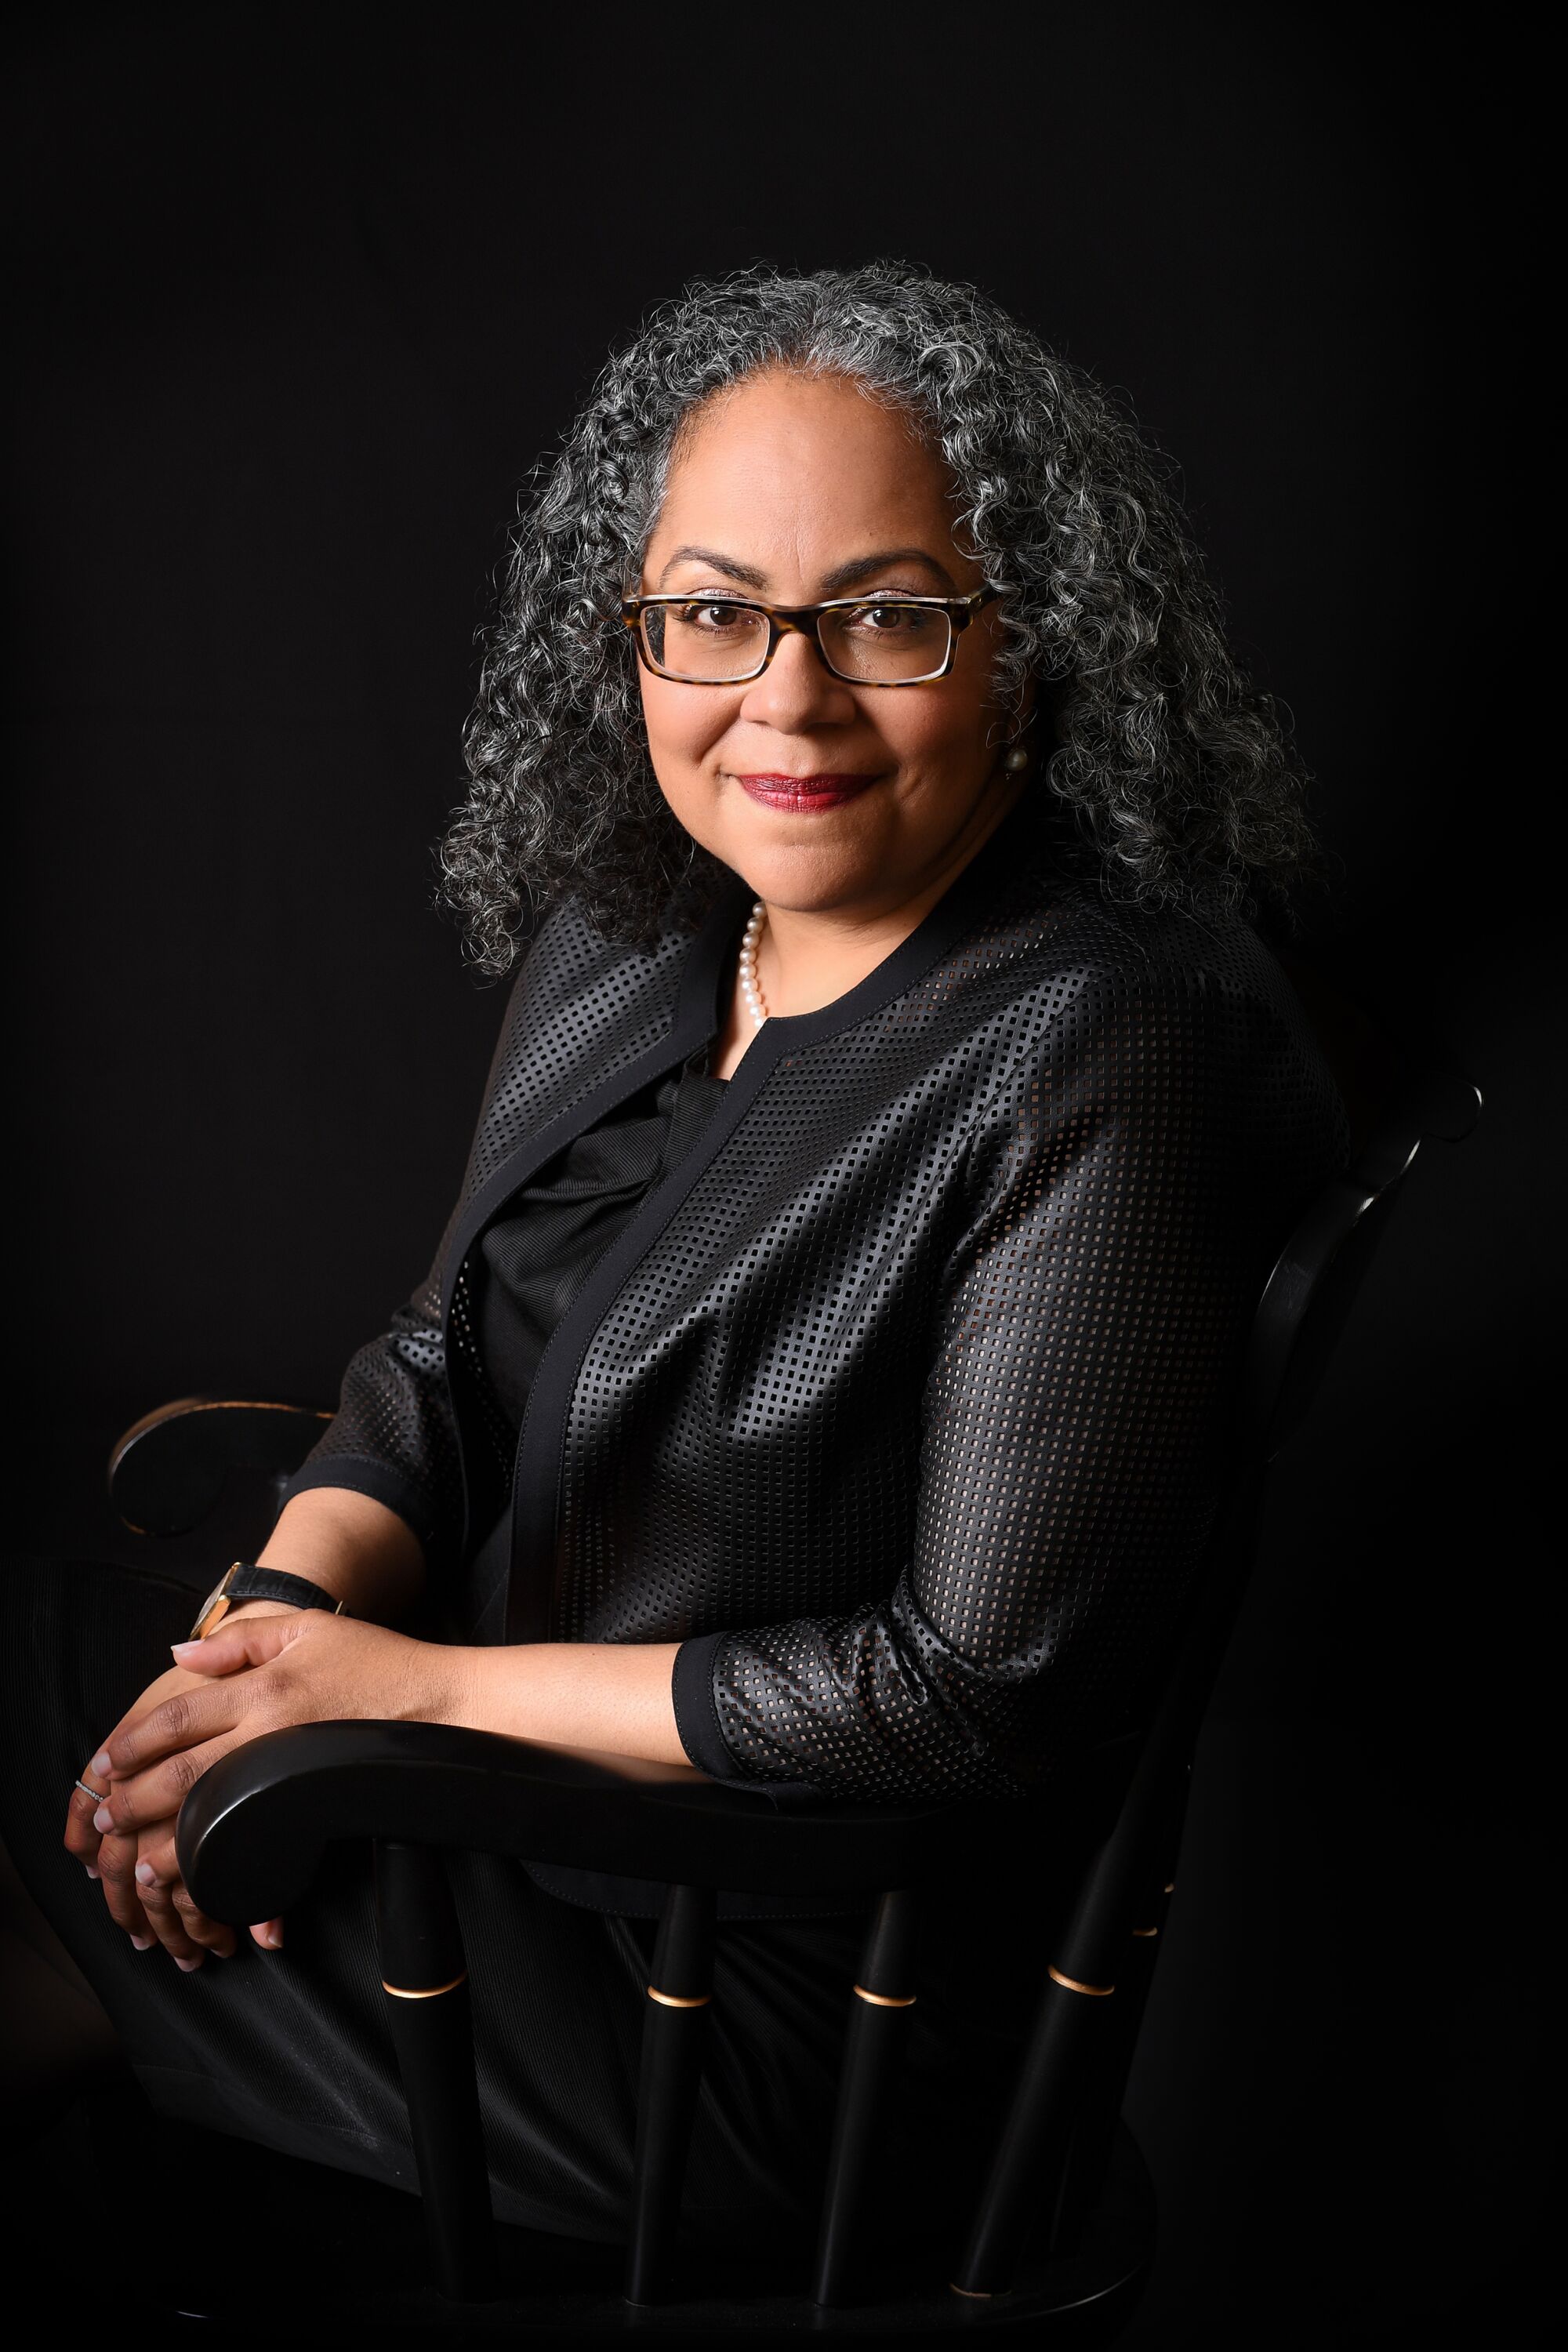 A portrait of Fordham University law professor Tanya Kateri Hernandez